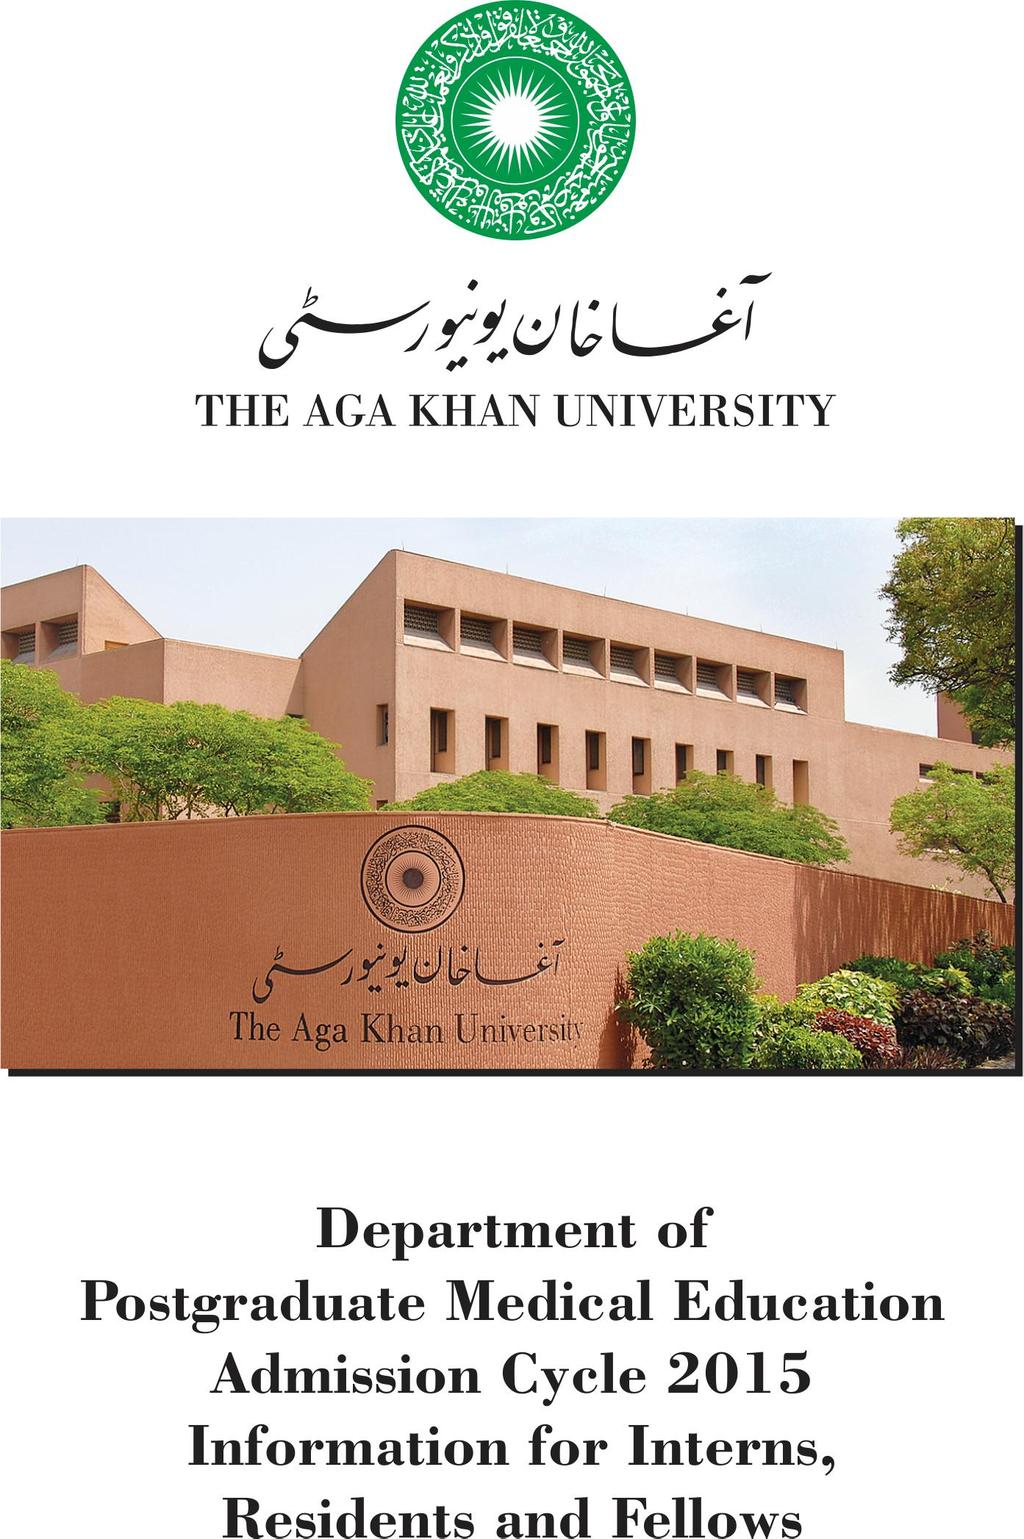 The Aga Khan University Department of Postgraduate Medical Education